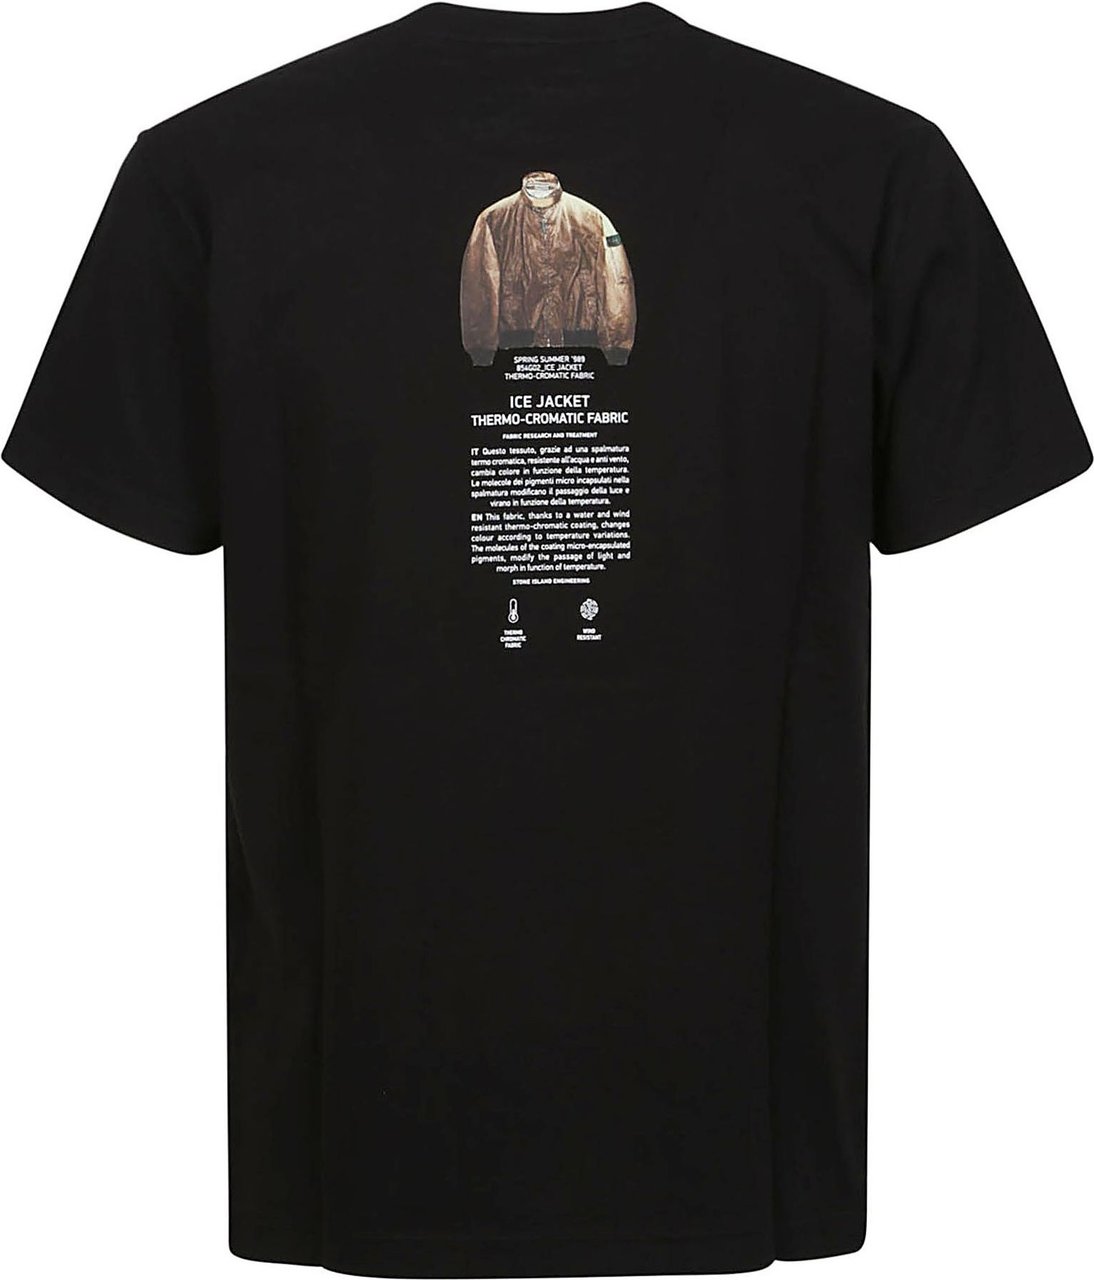 Stone Island T-shirt Black Zwart